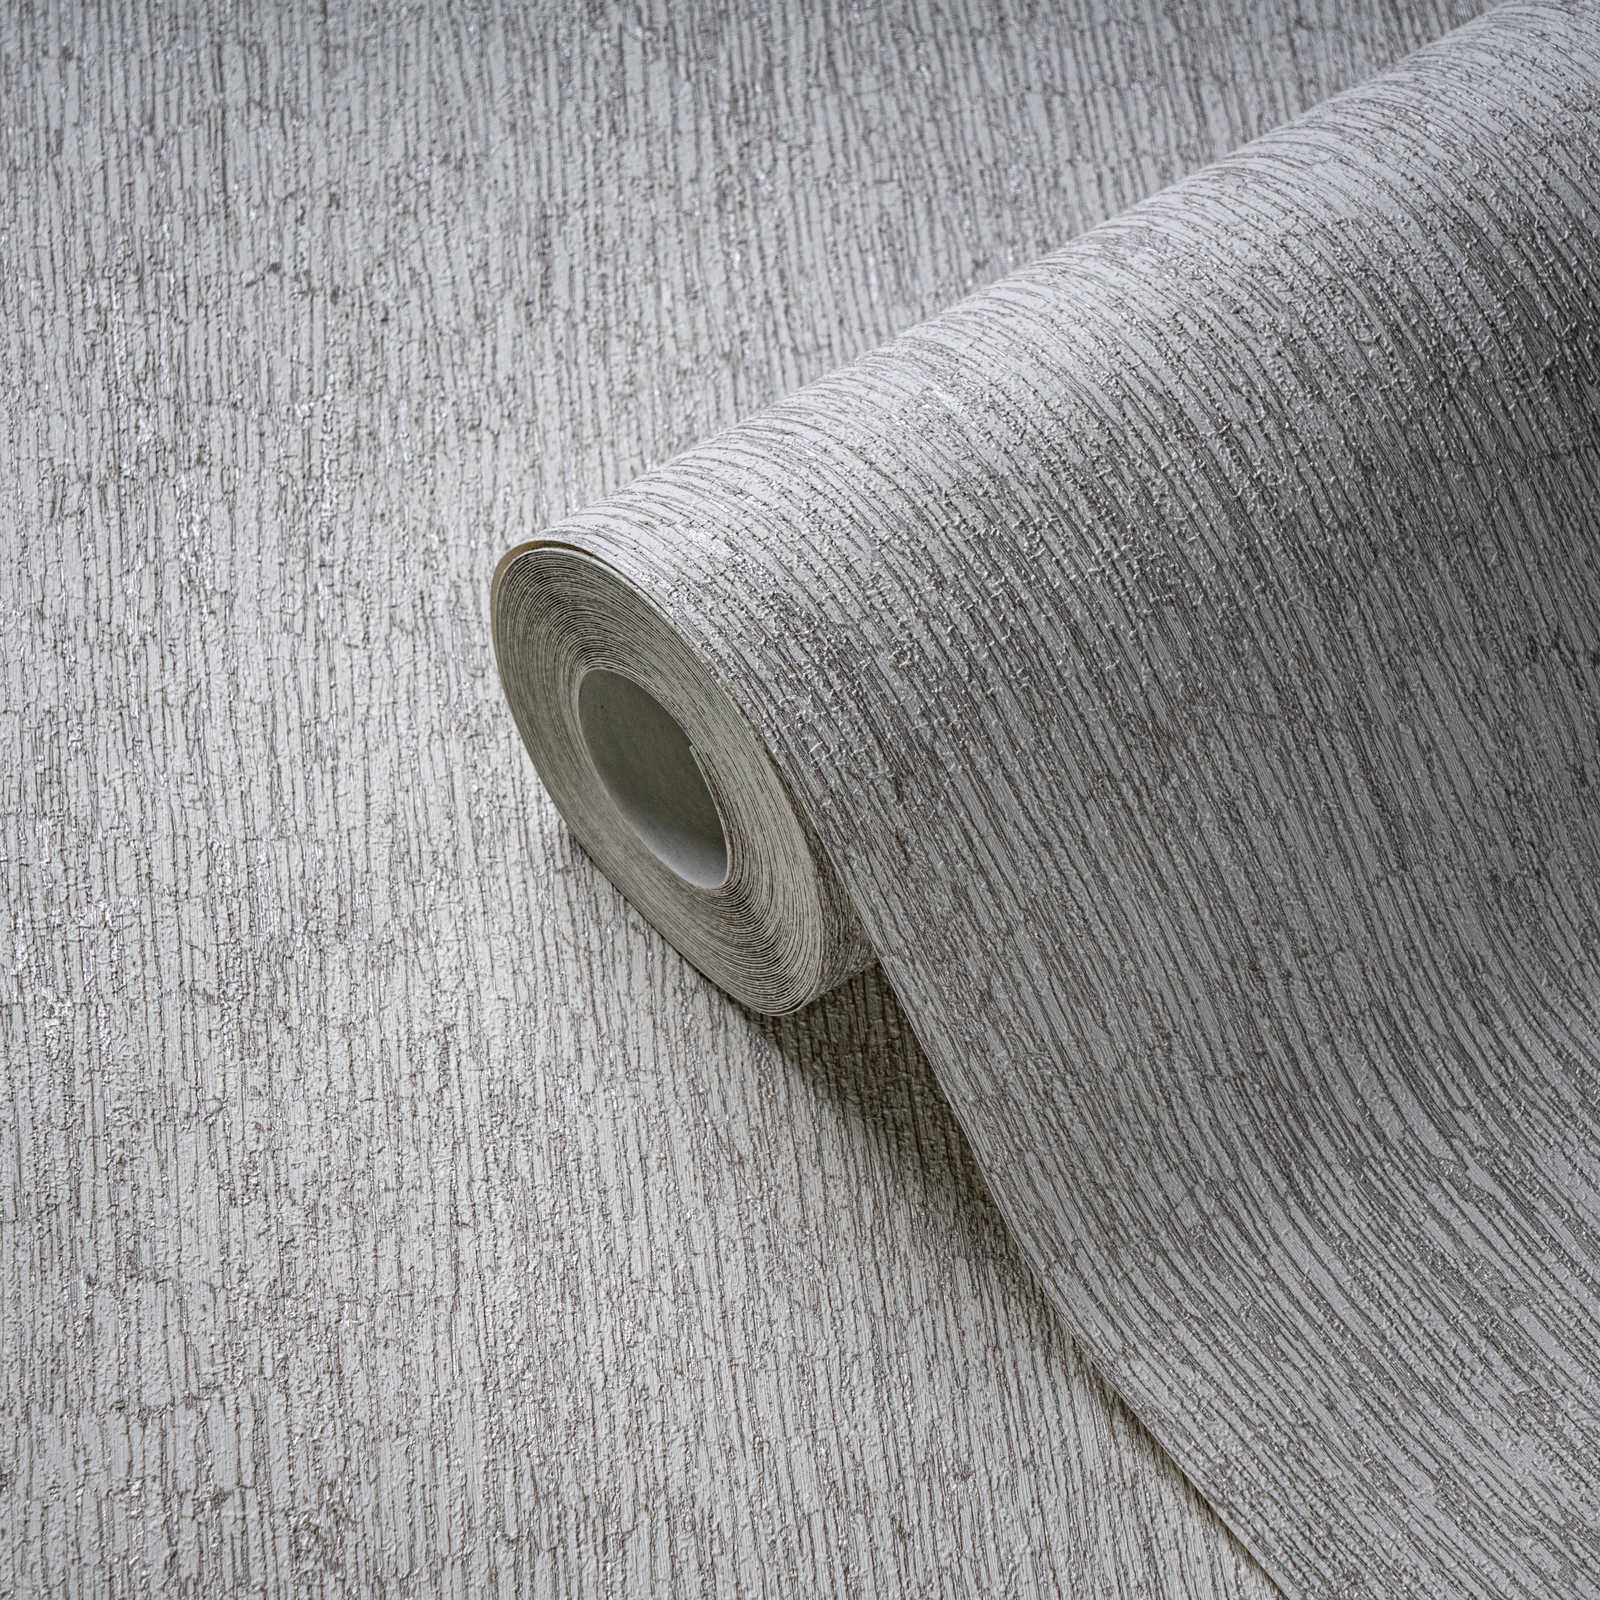             Vliesbehang in textiellook, licht glanzend - wit, grijs, zilver
        